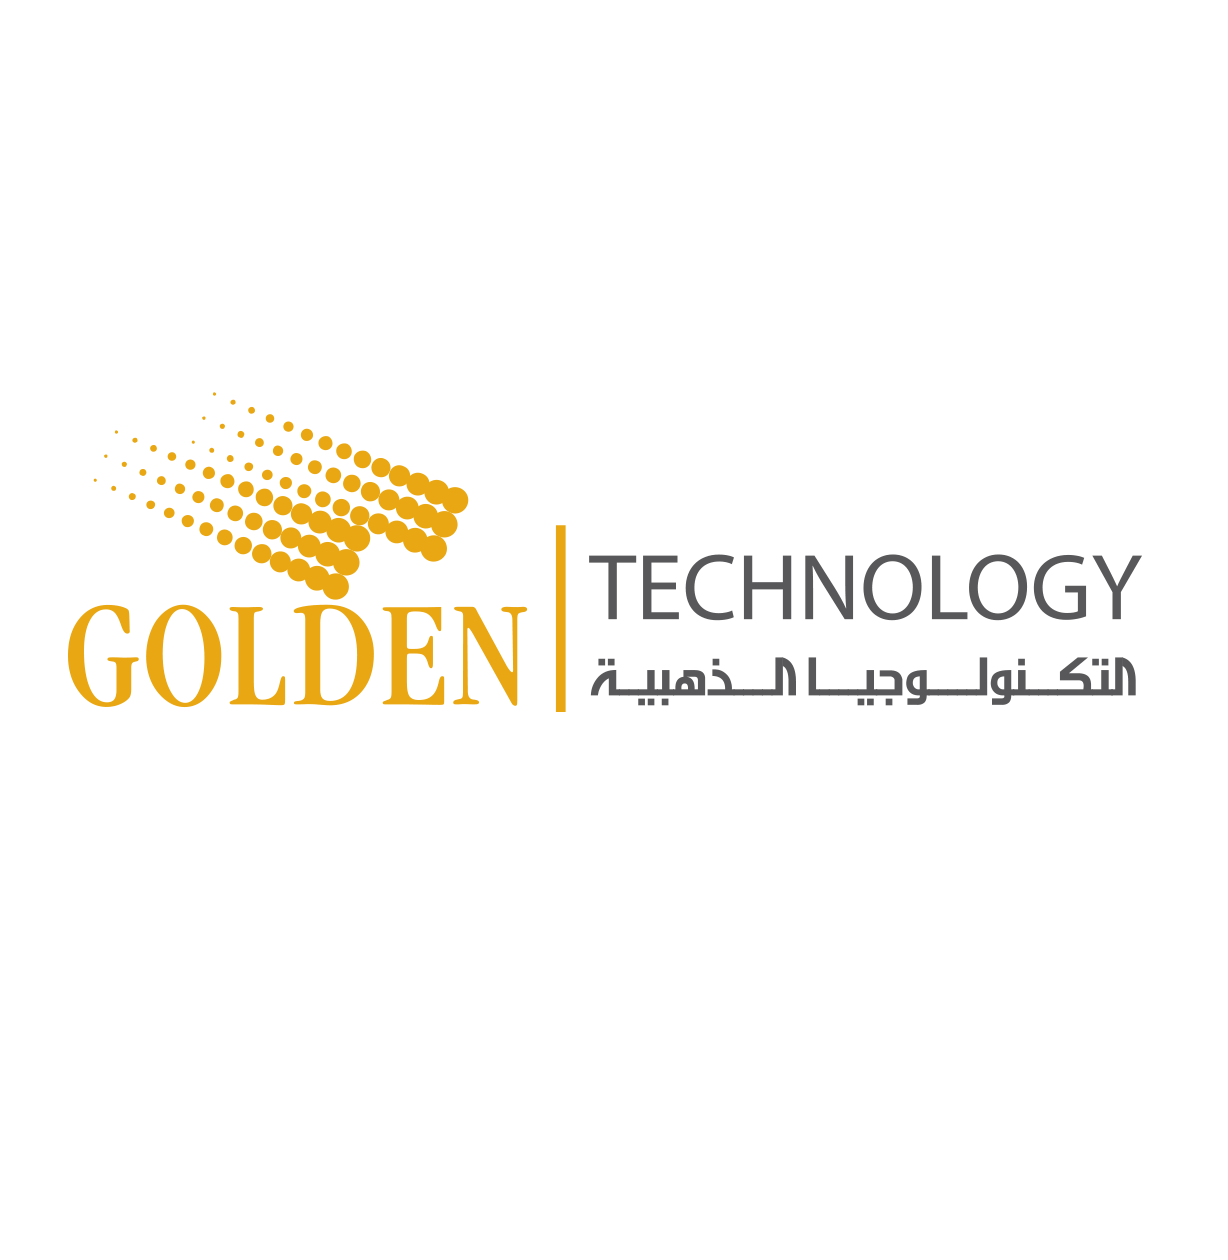 Golden Technologys